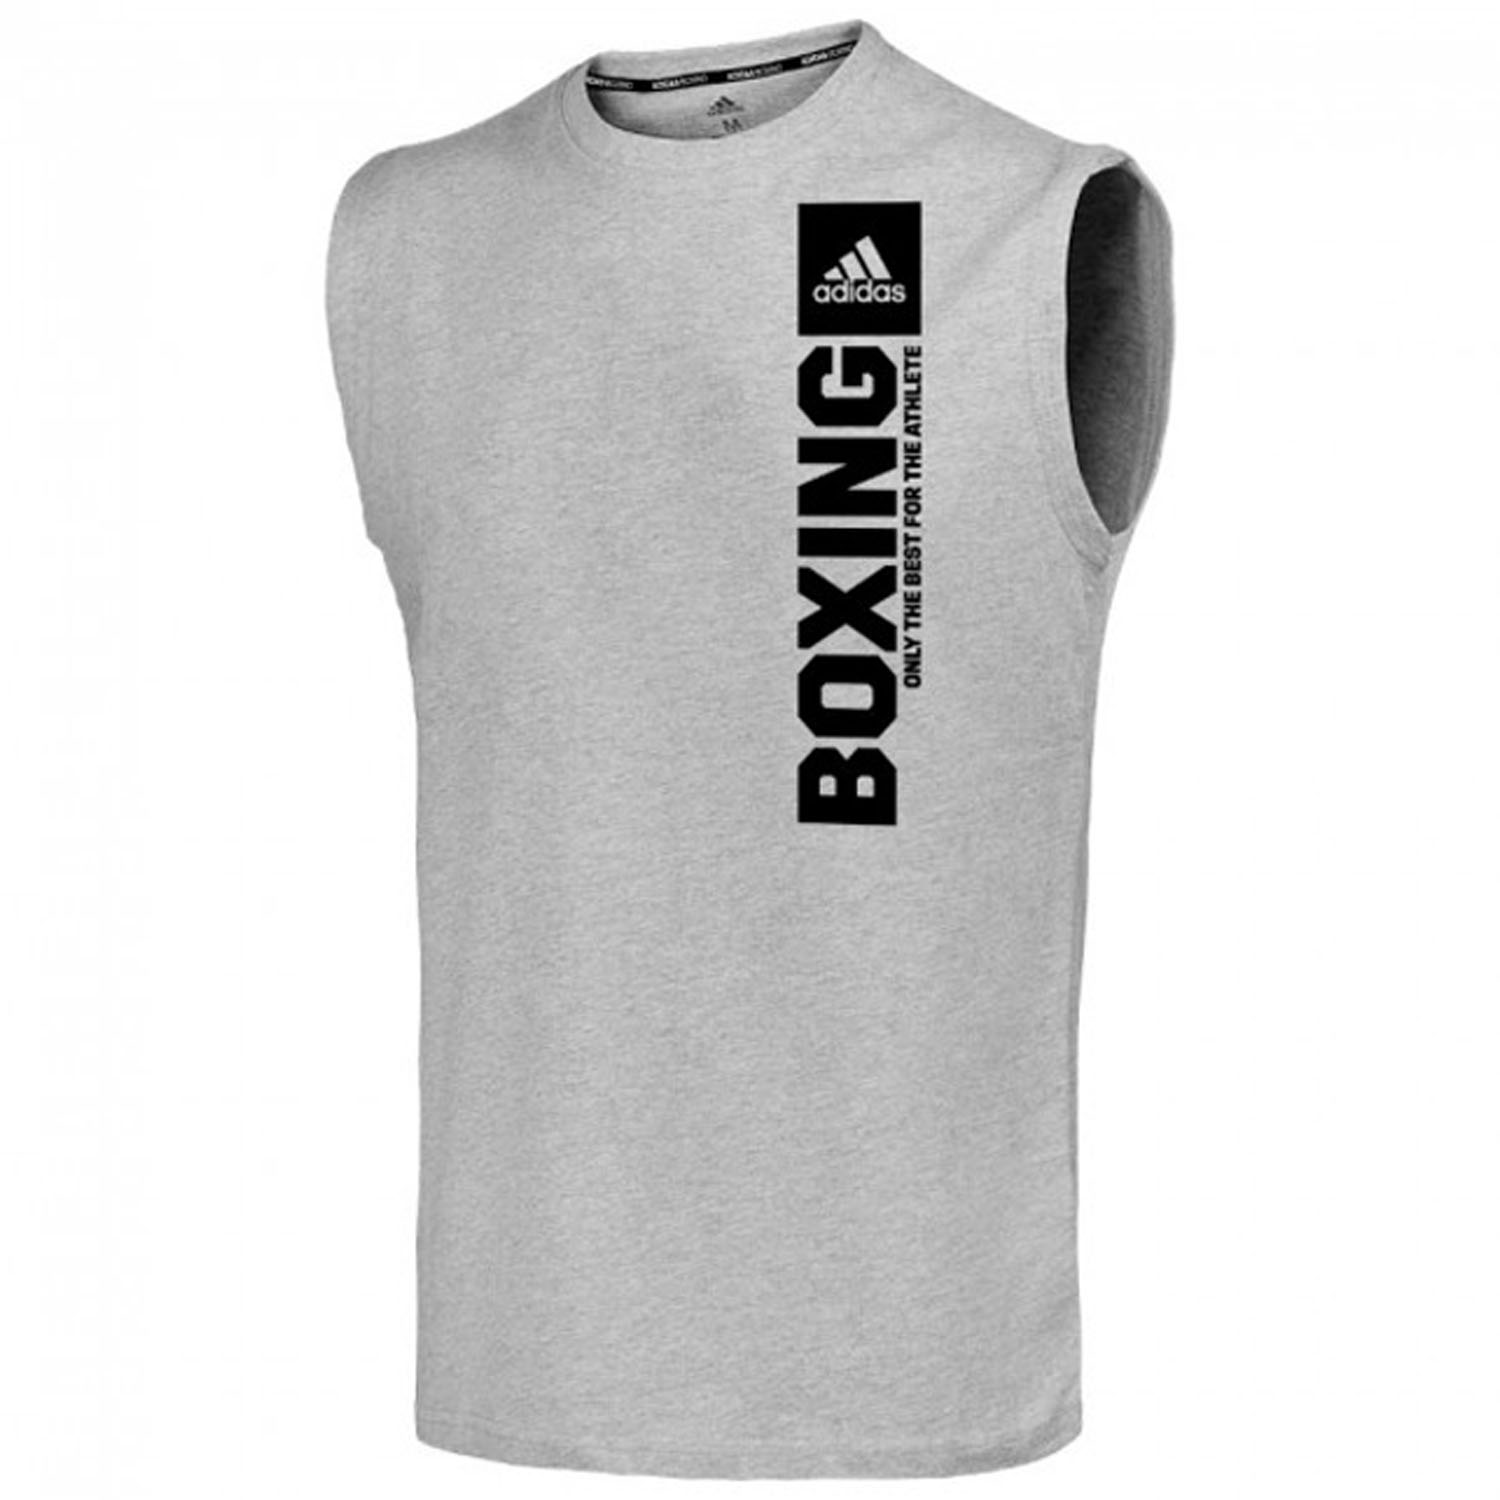 adidas Sleeveless T-Shirt, Community Vertical Boxing, grey, XL